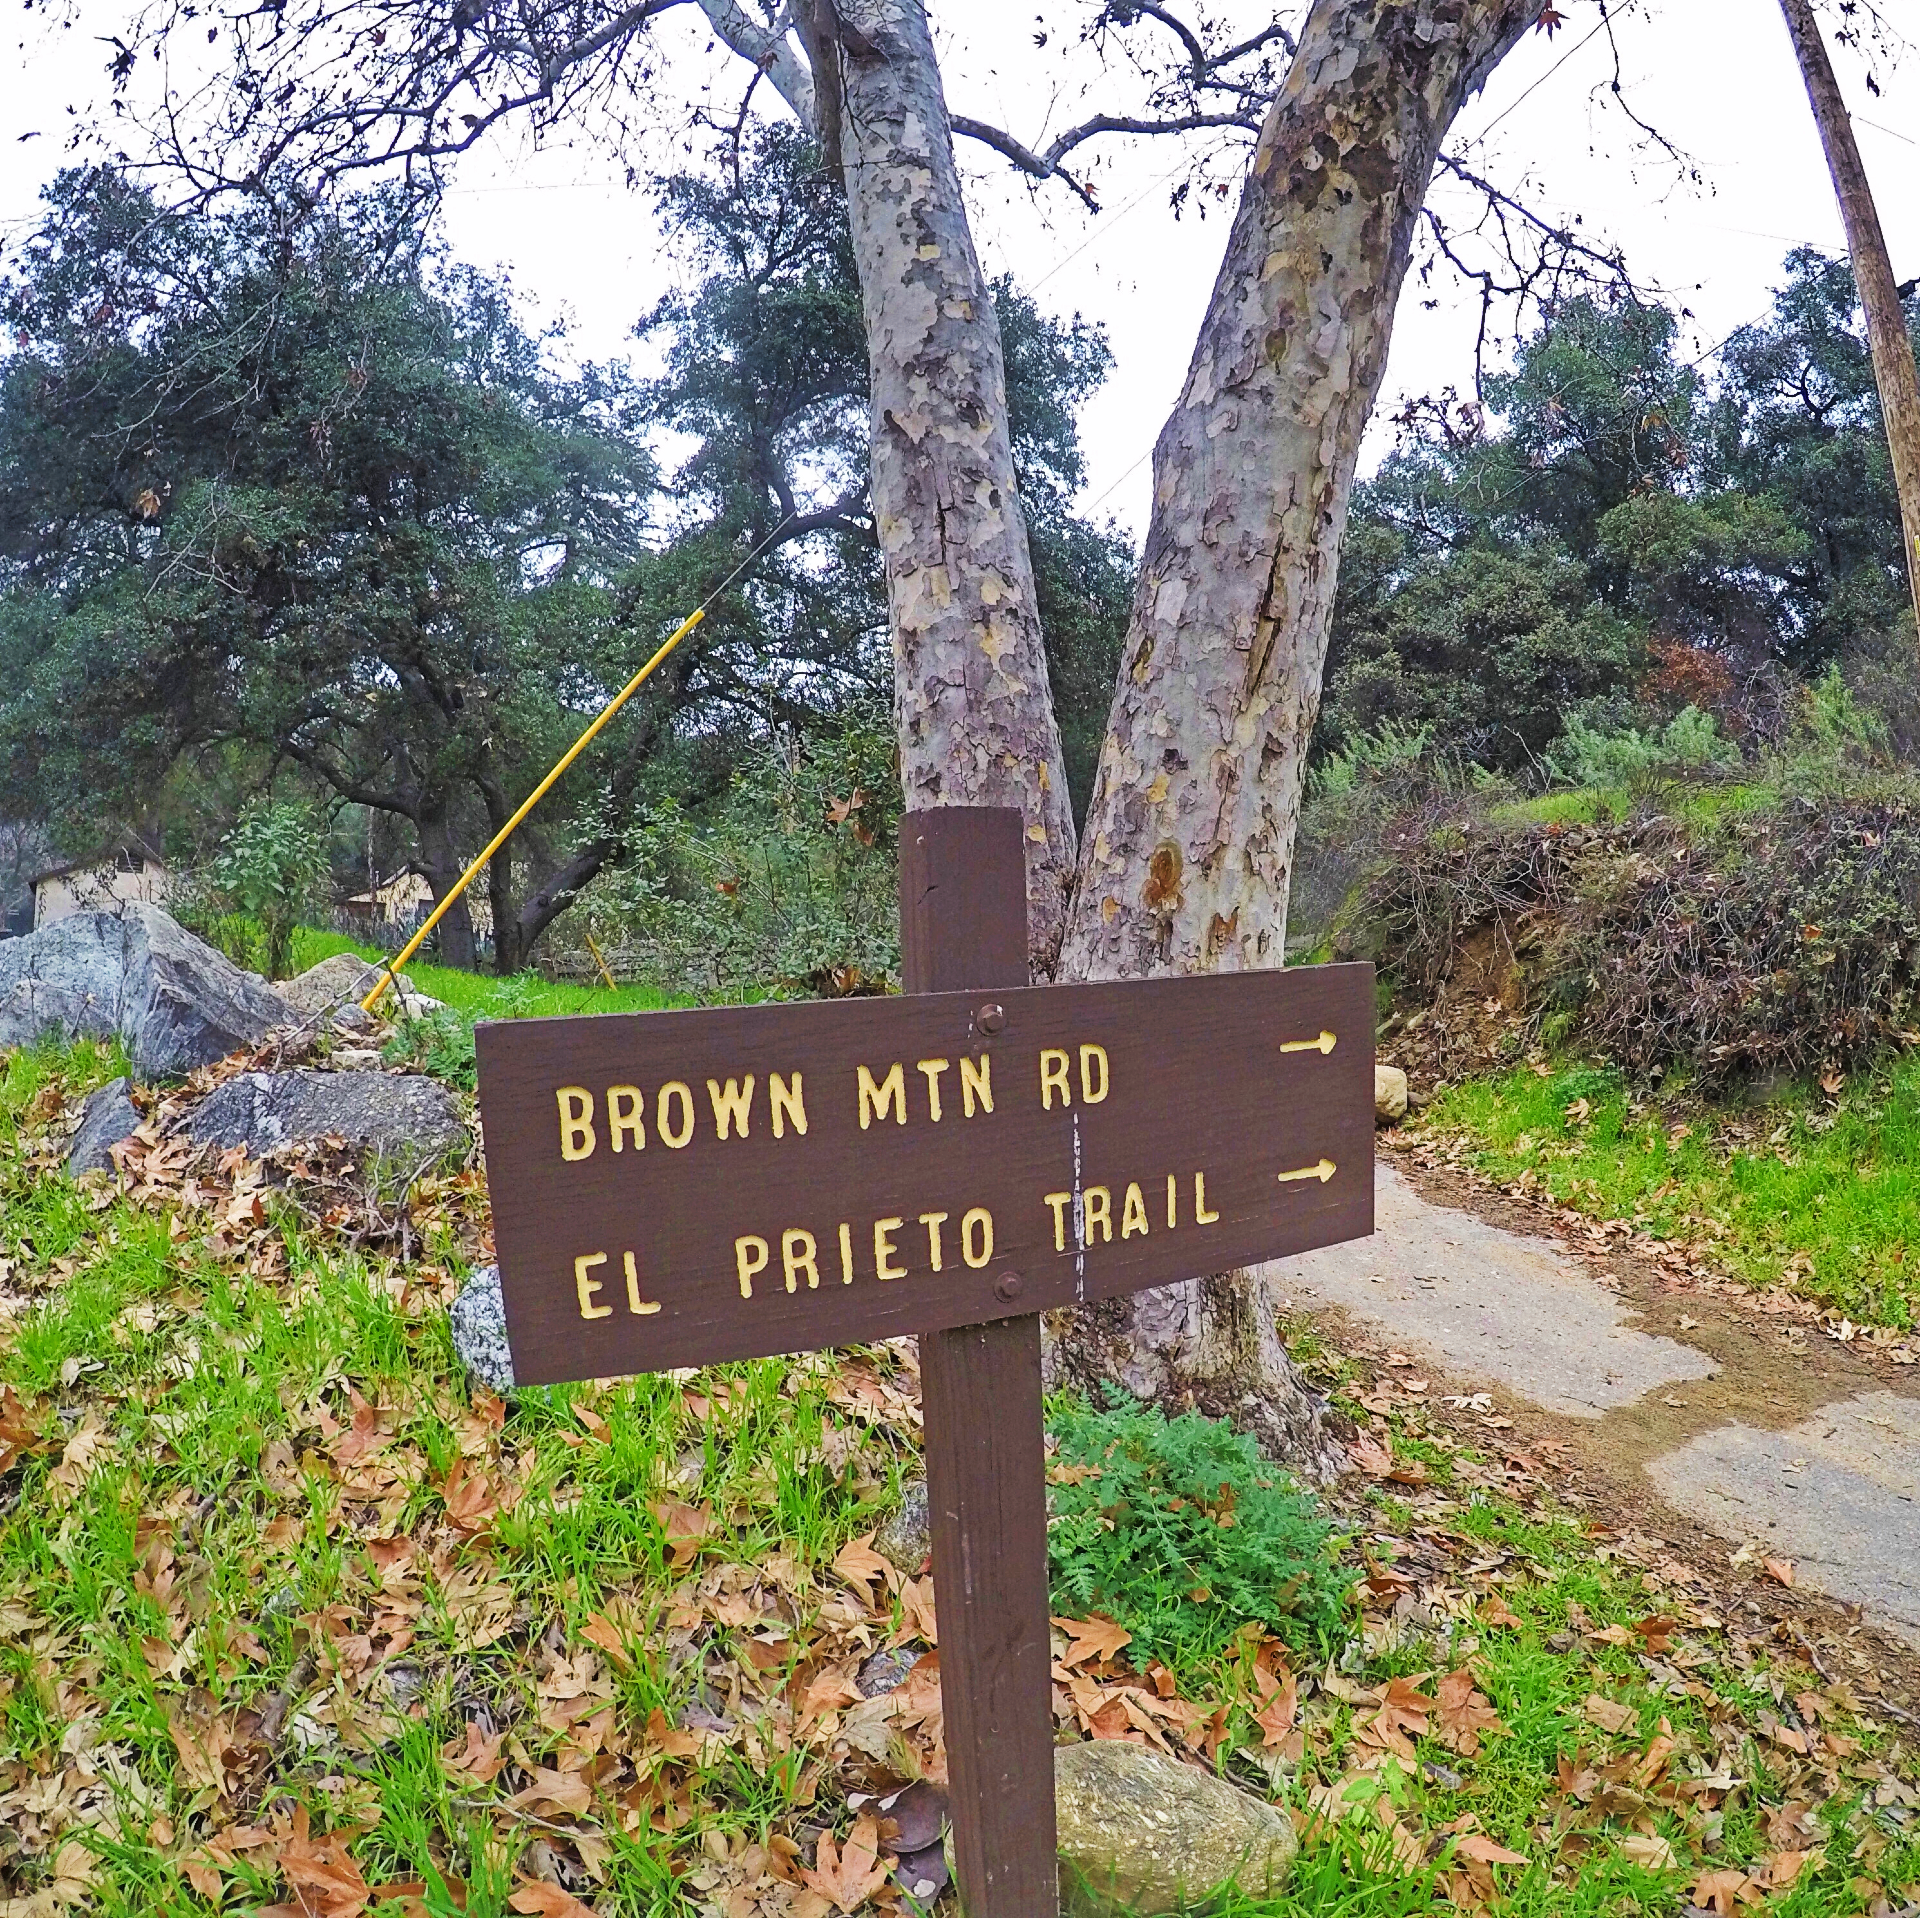 El Prieto Trail